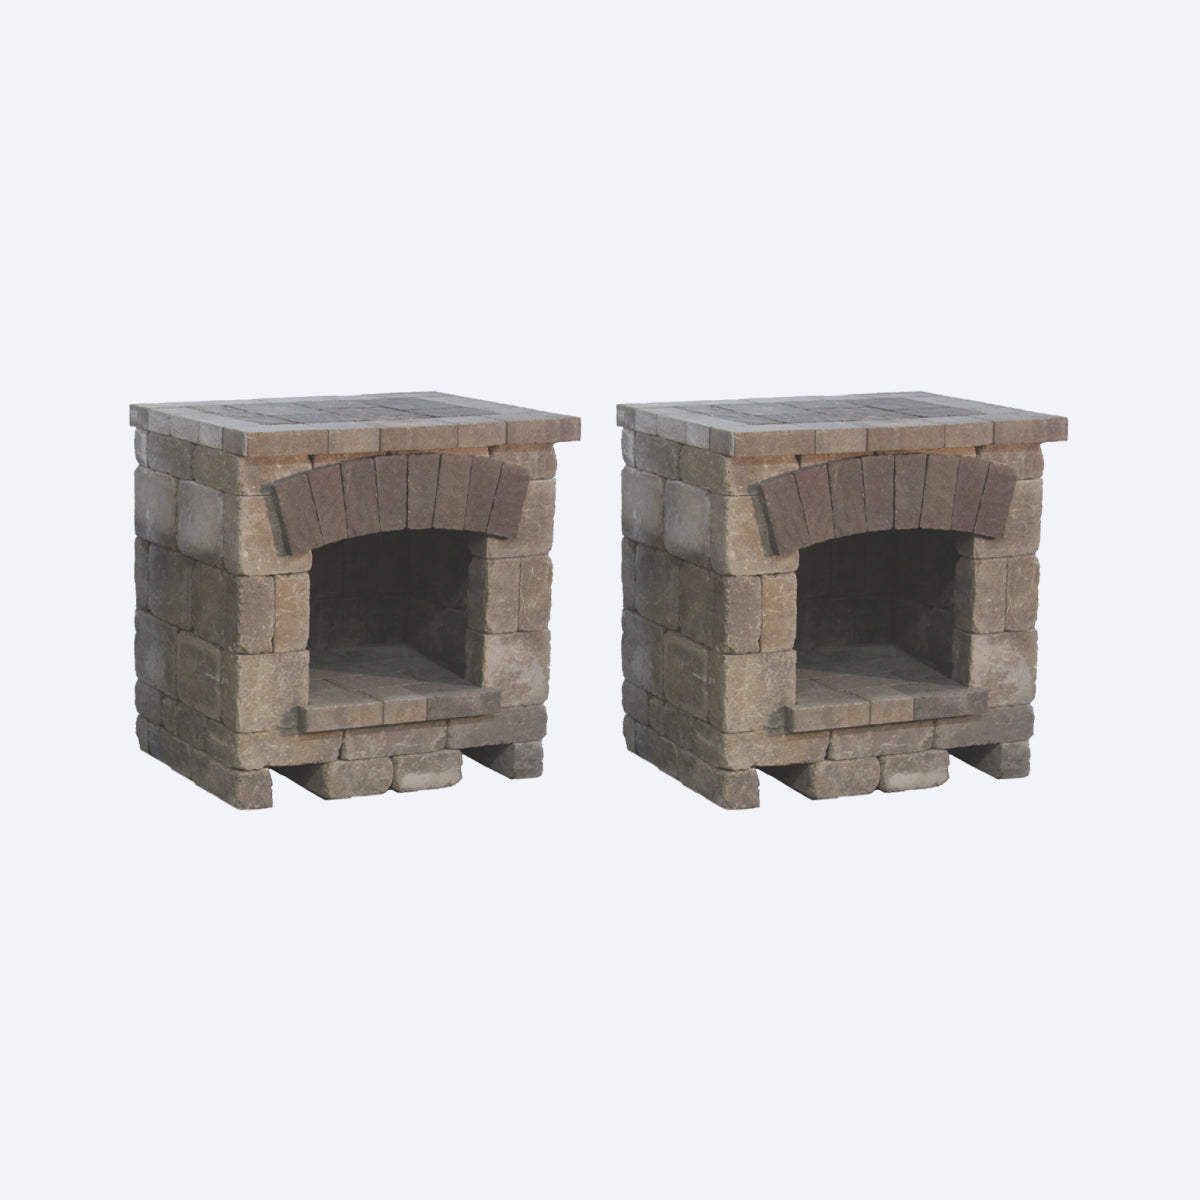 Wood Boxes |2’4”D x 3’W x 3’3”H per box  |(Sold as a pair)